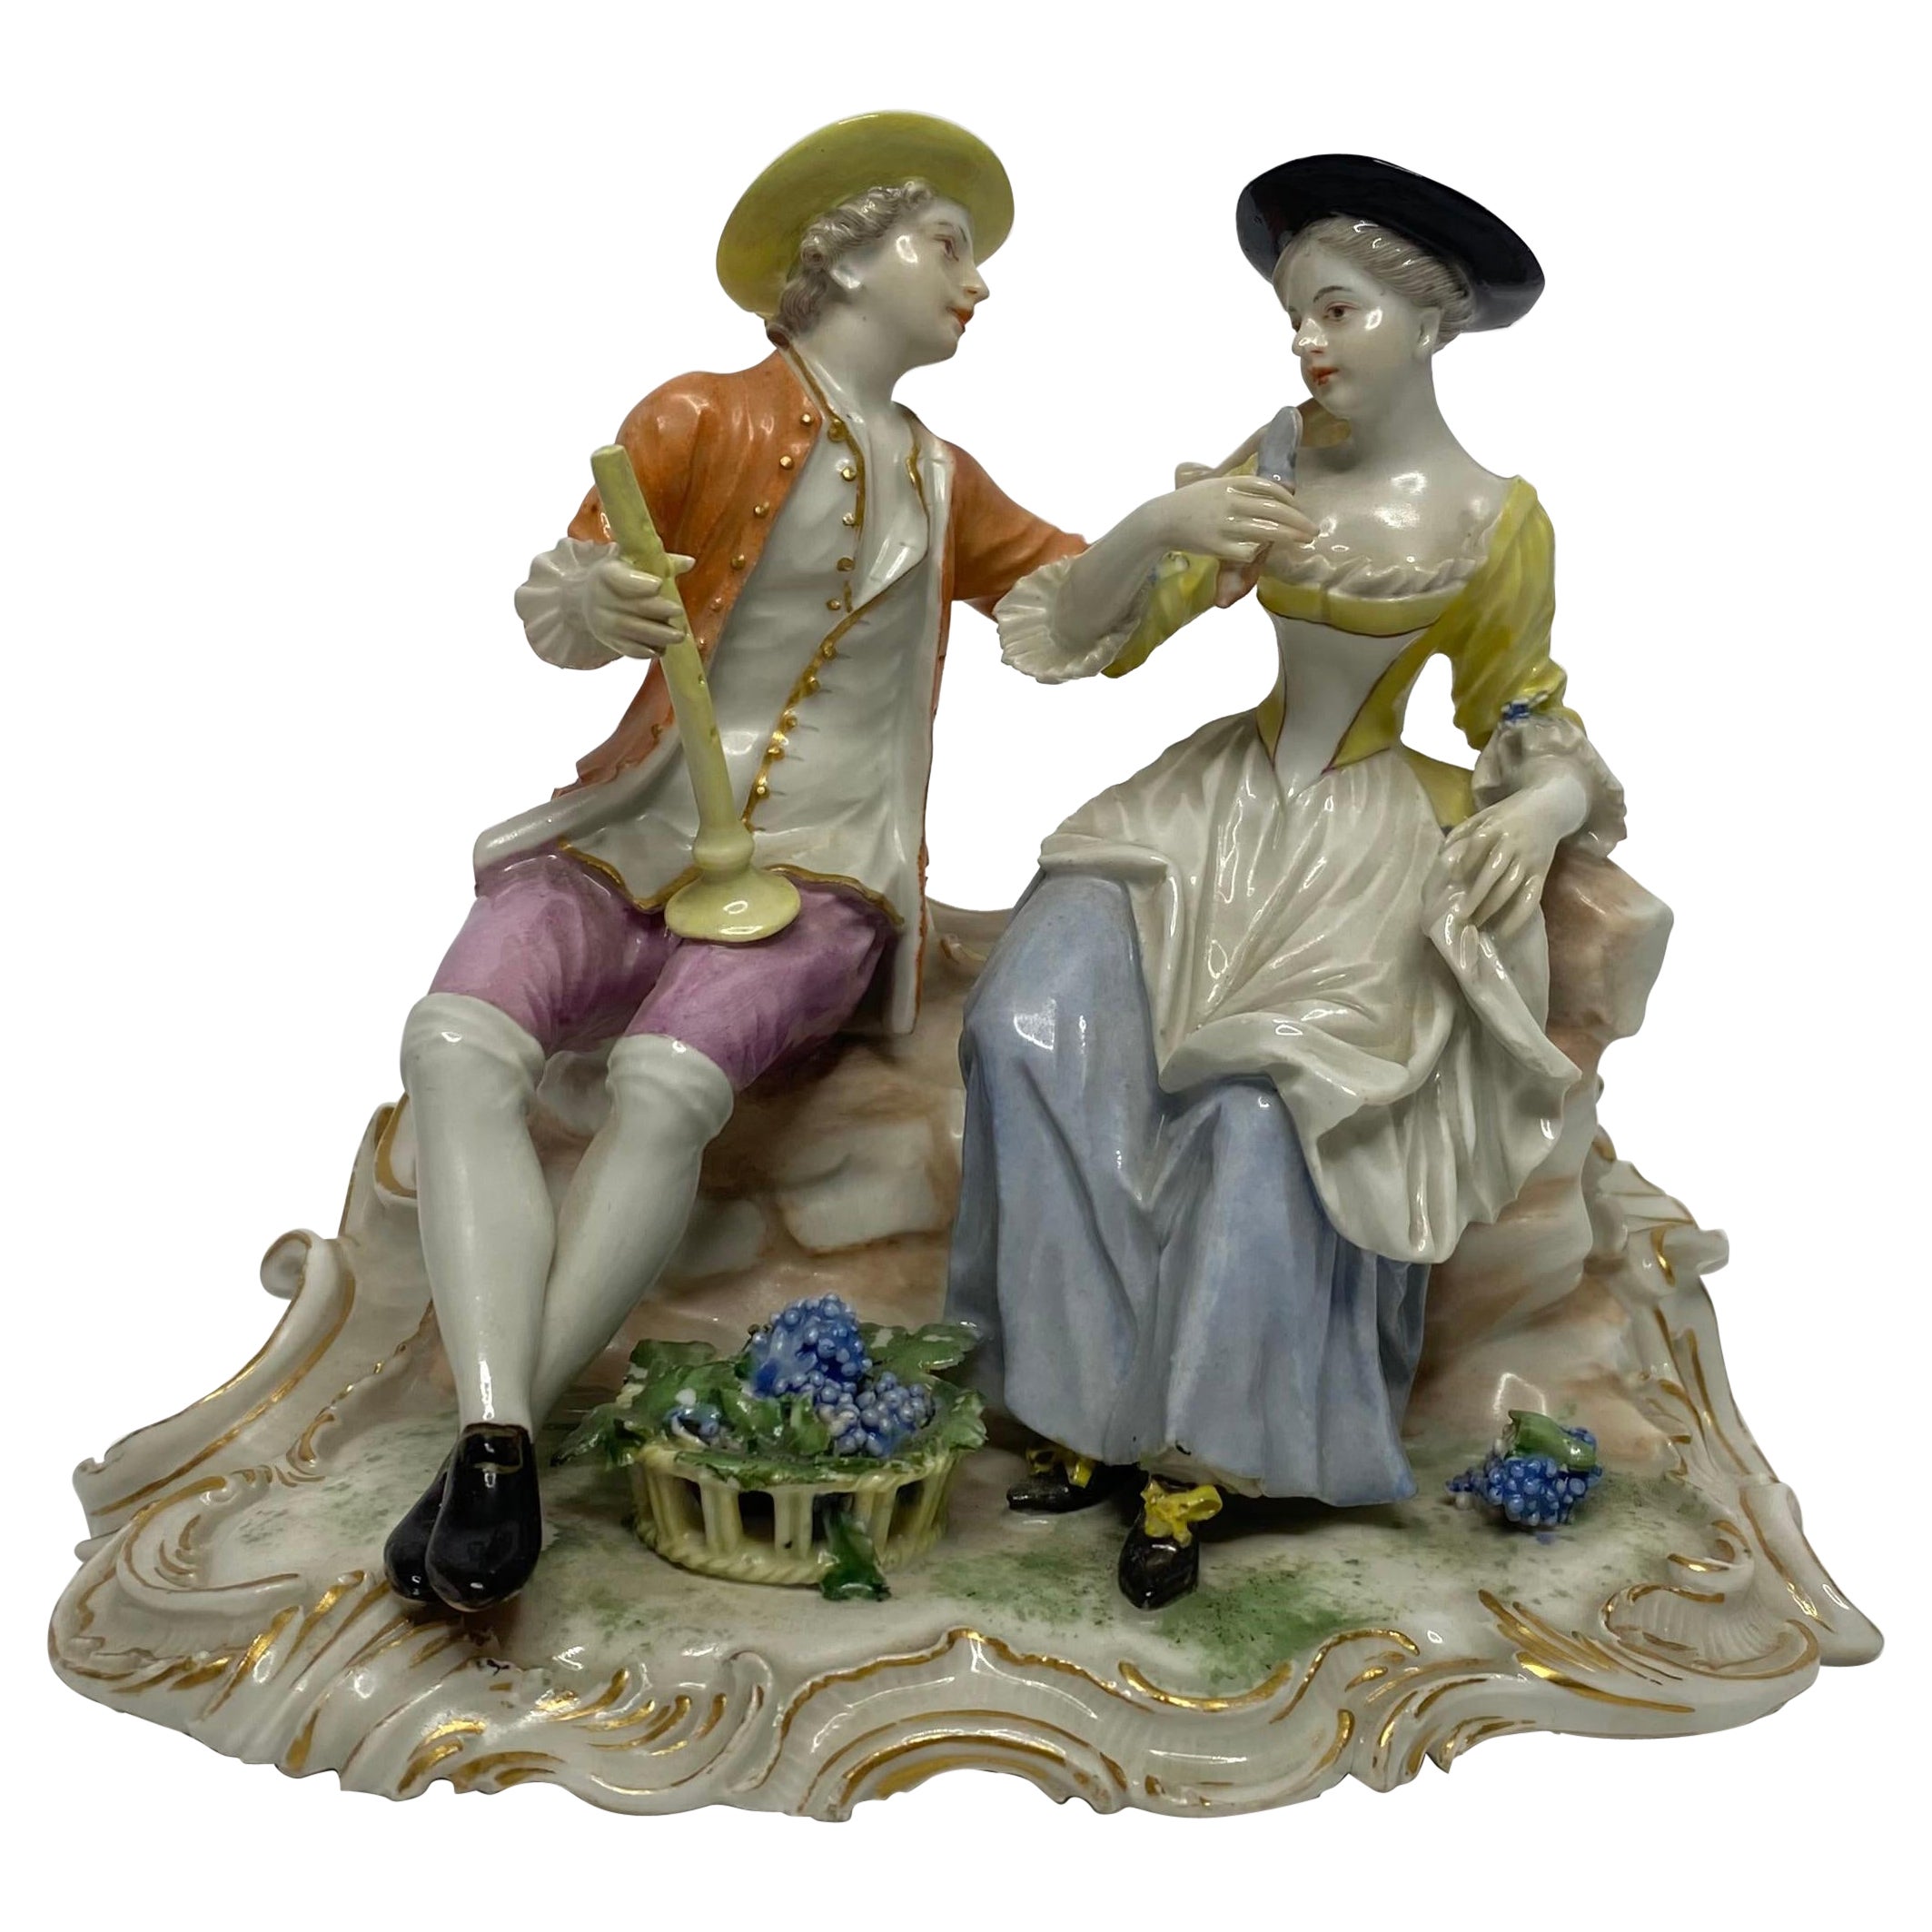 Ludwigsburg porcelain group, J.C. Haselmeyer, c. 1770. For Sale